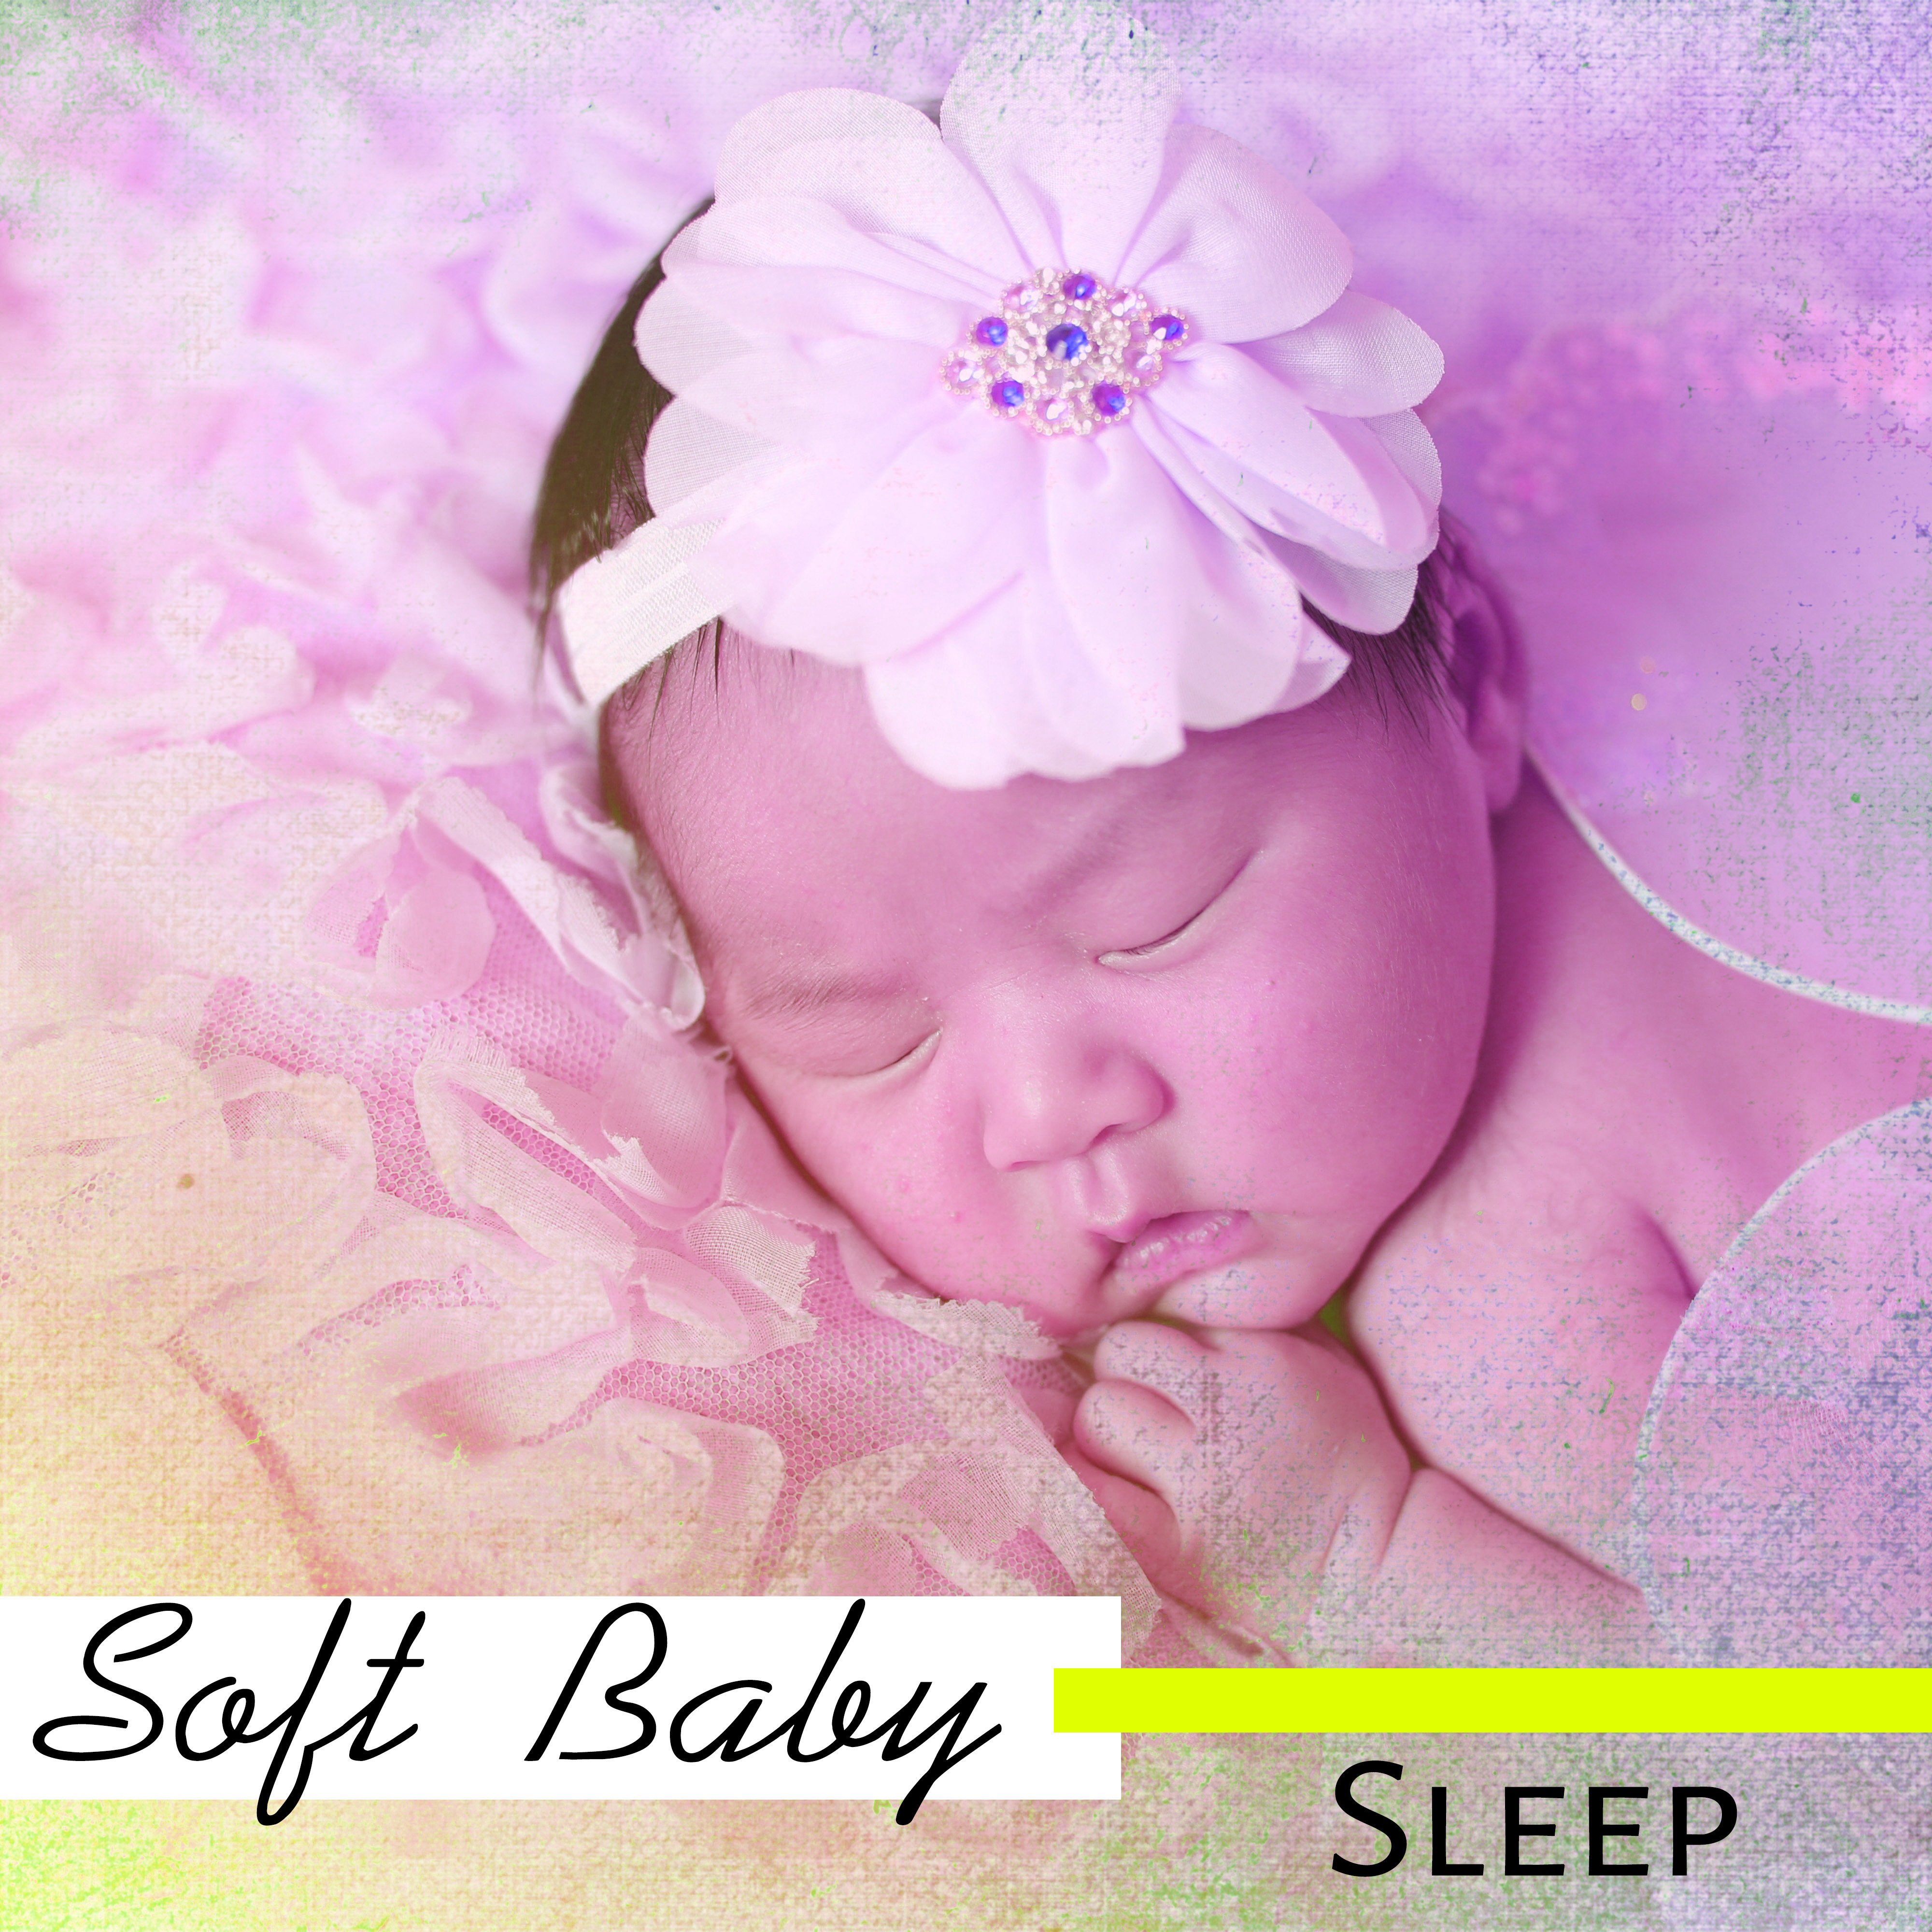 Soft Baby Sleep  Sweet Dreams My Darling, Soft New Age Music for Baby, Sleep Well, Calm Night